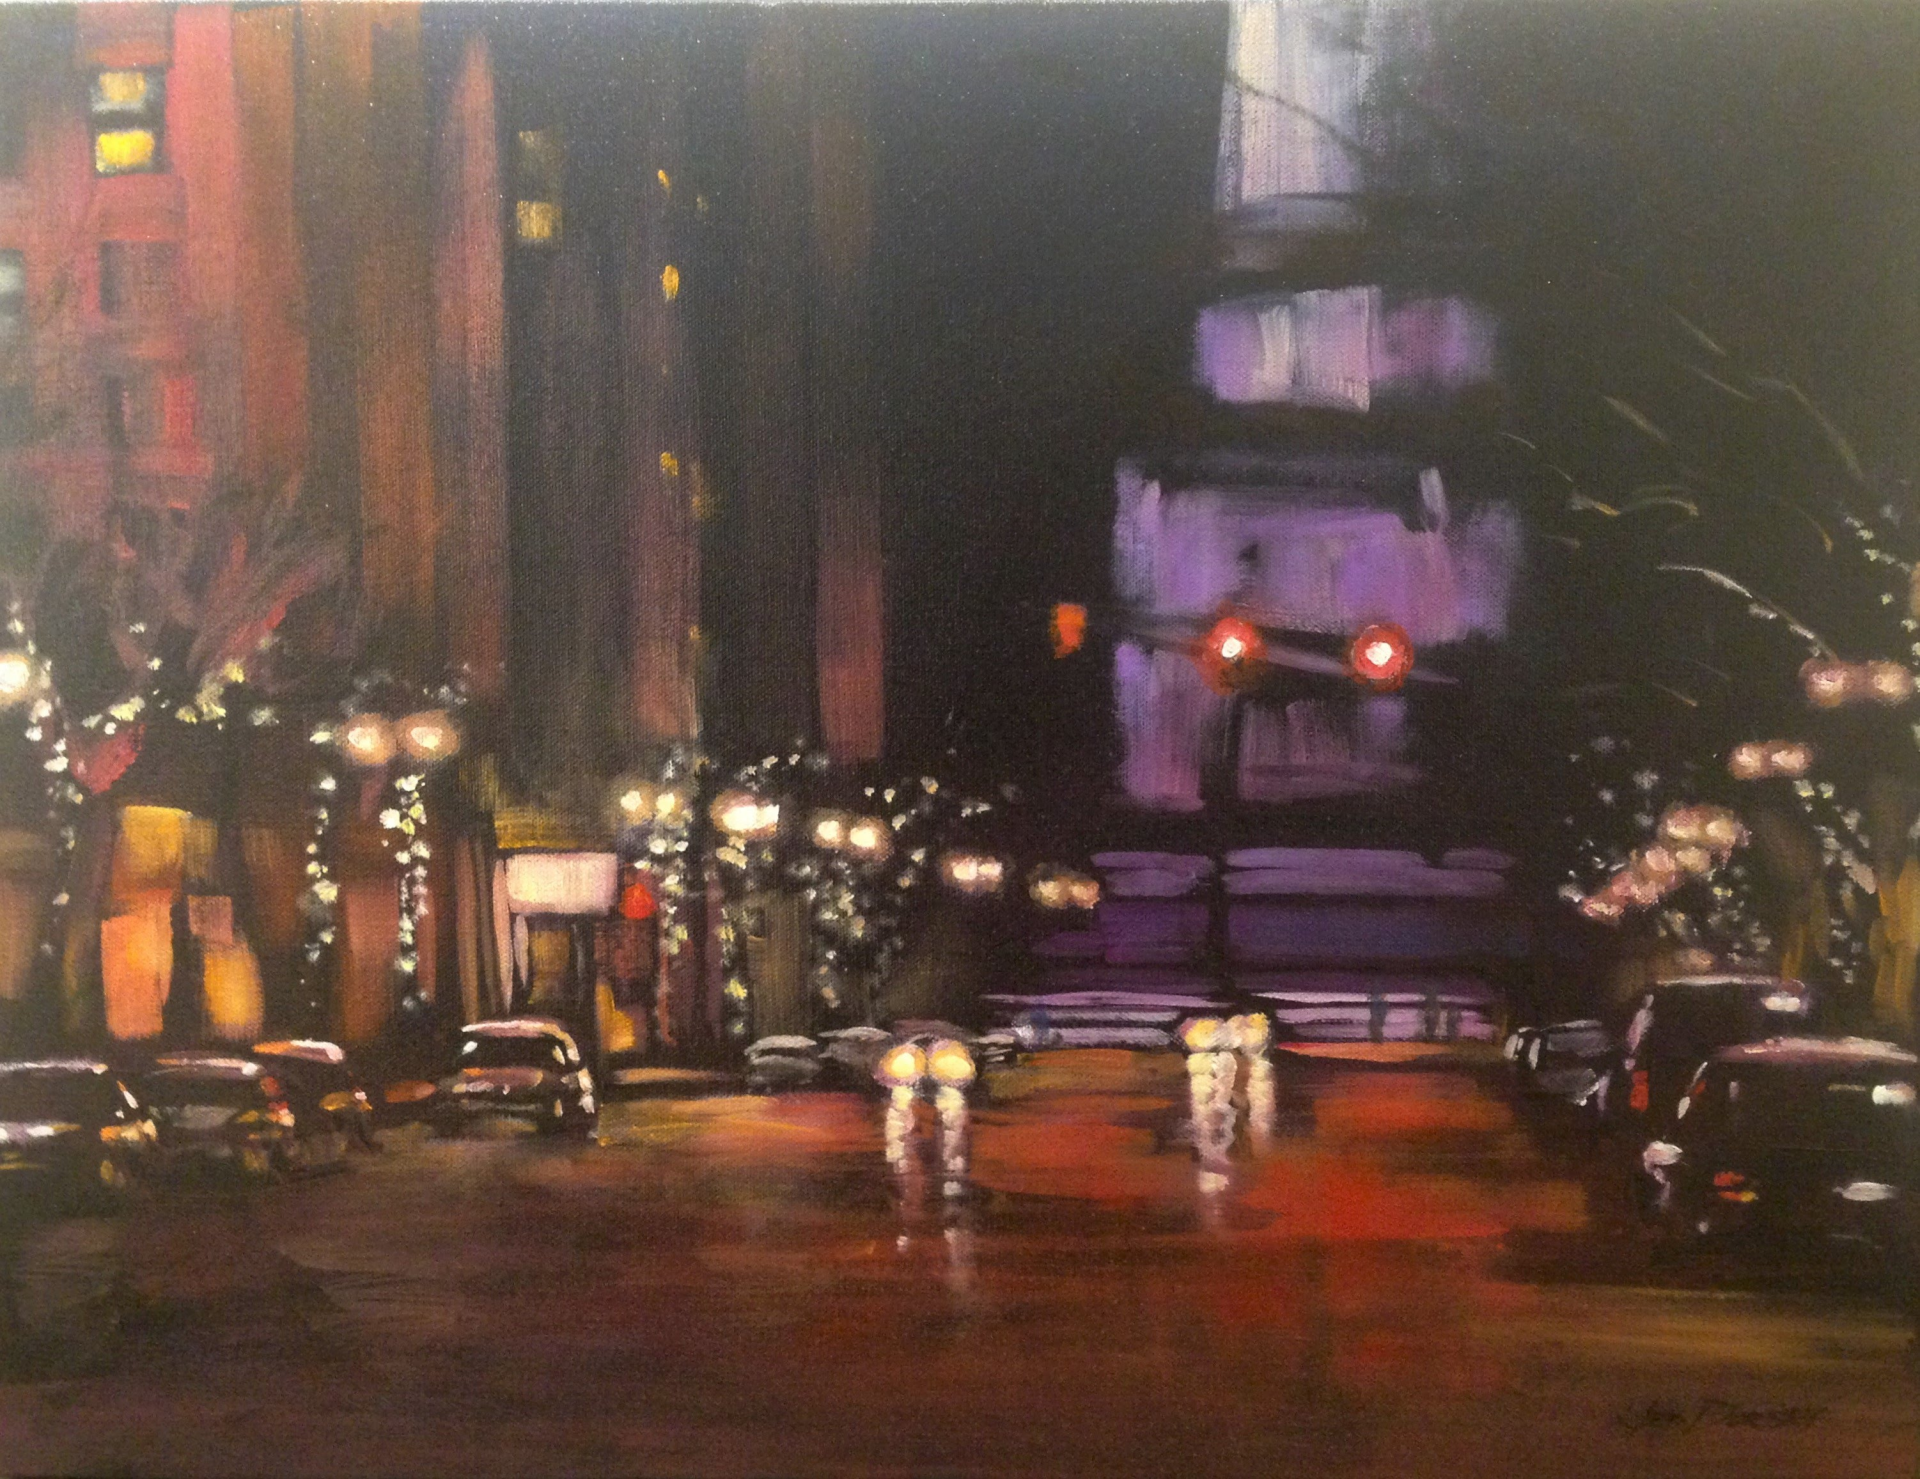 acrylic painting of a rainy night, city lights and cars